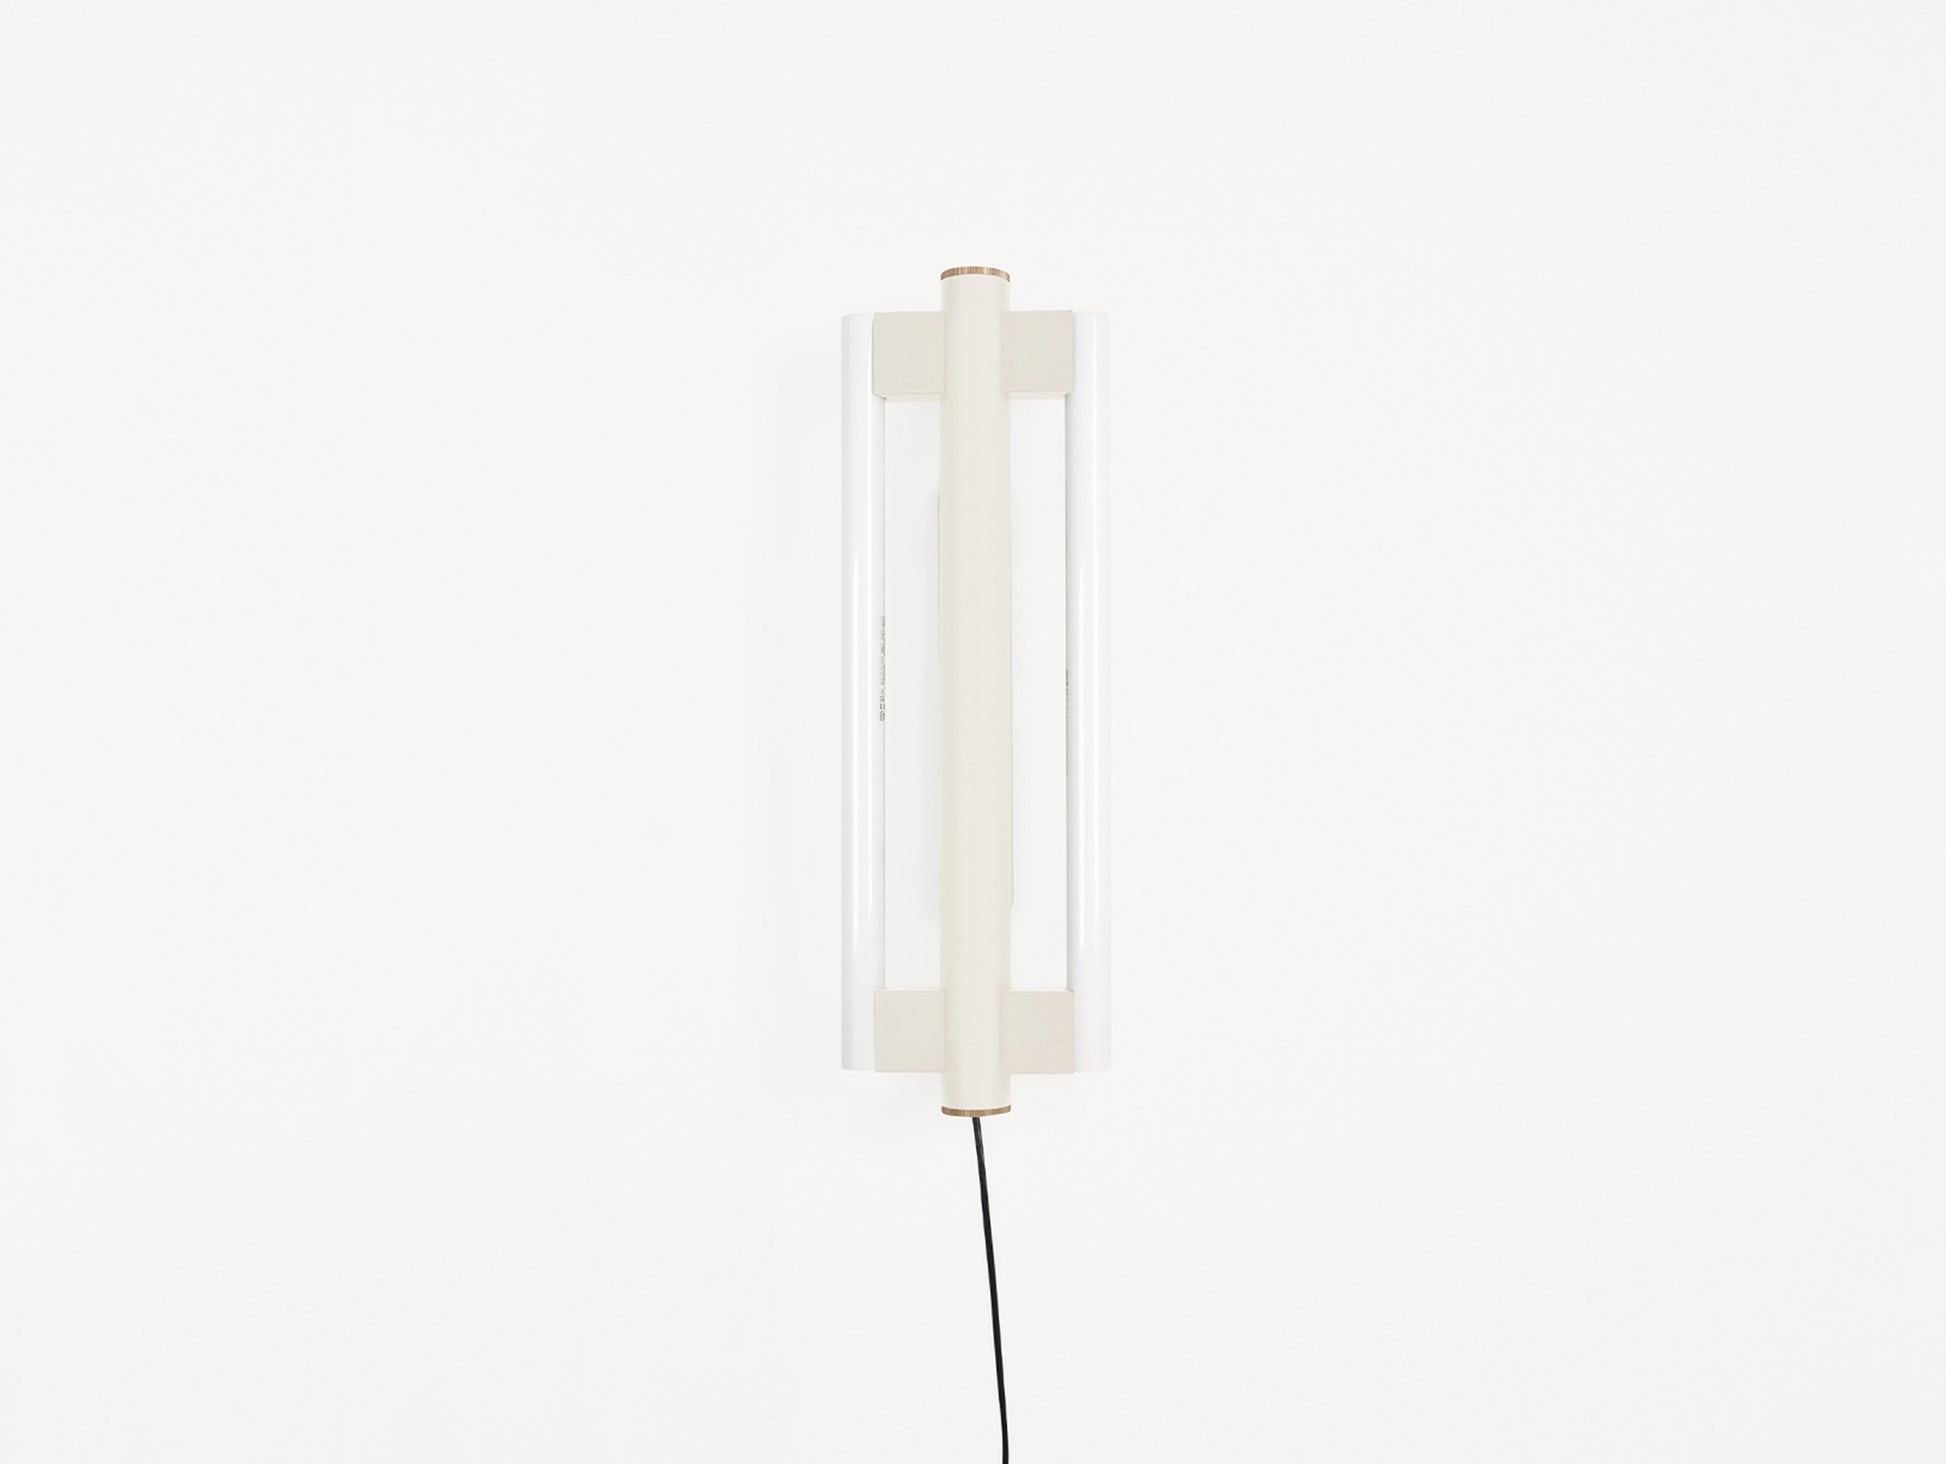 Eiffel Wall Lamp Double by Frama - Cream Powder Coated Steel / Height 500 mm